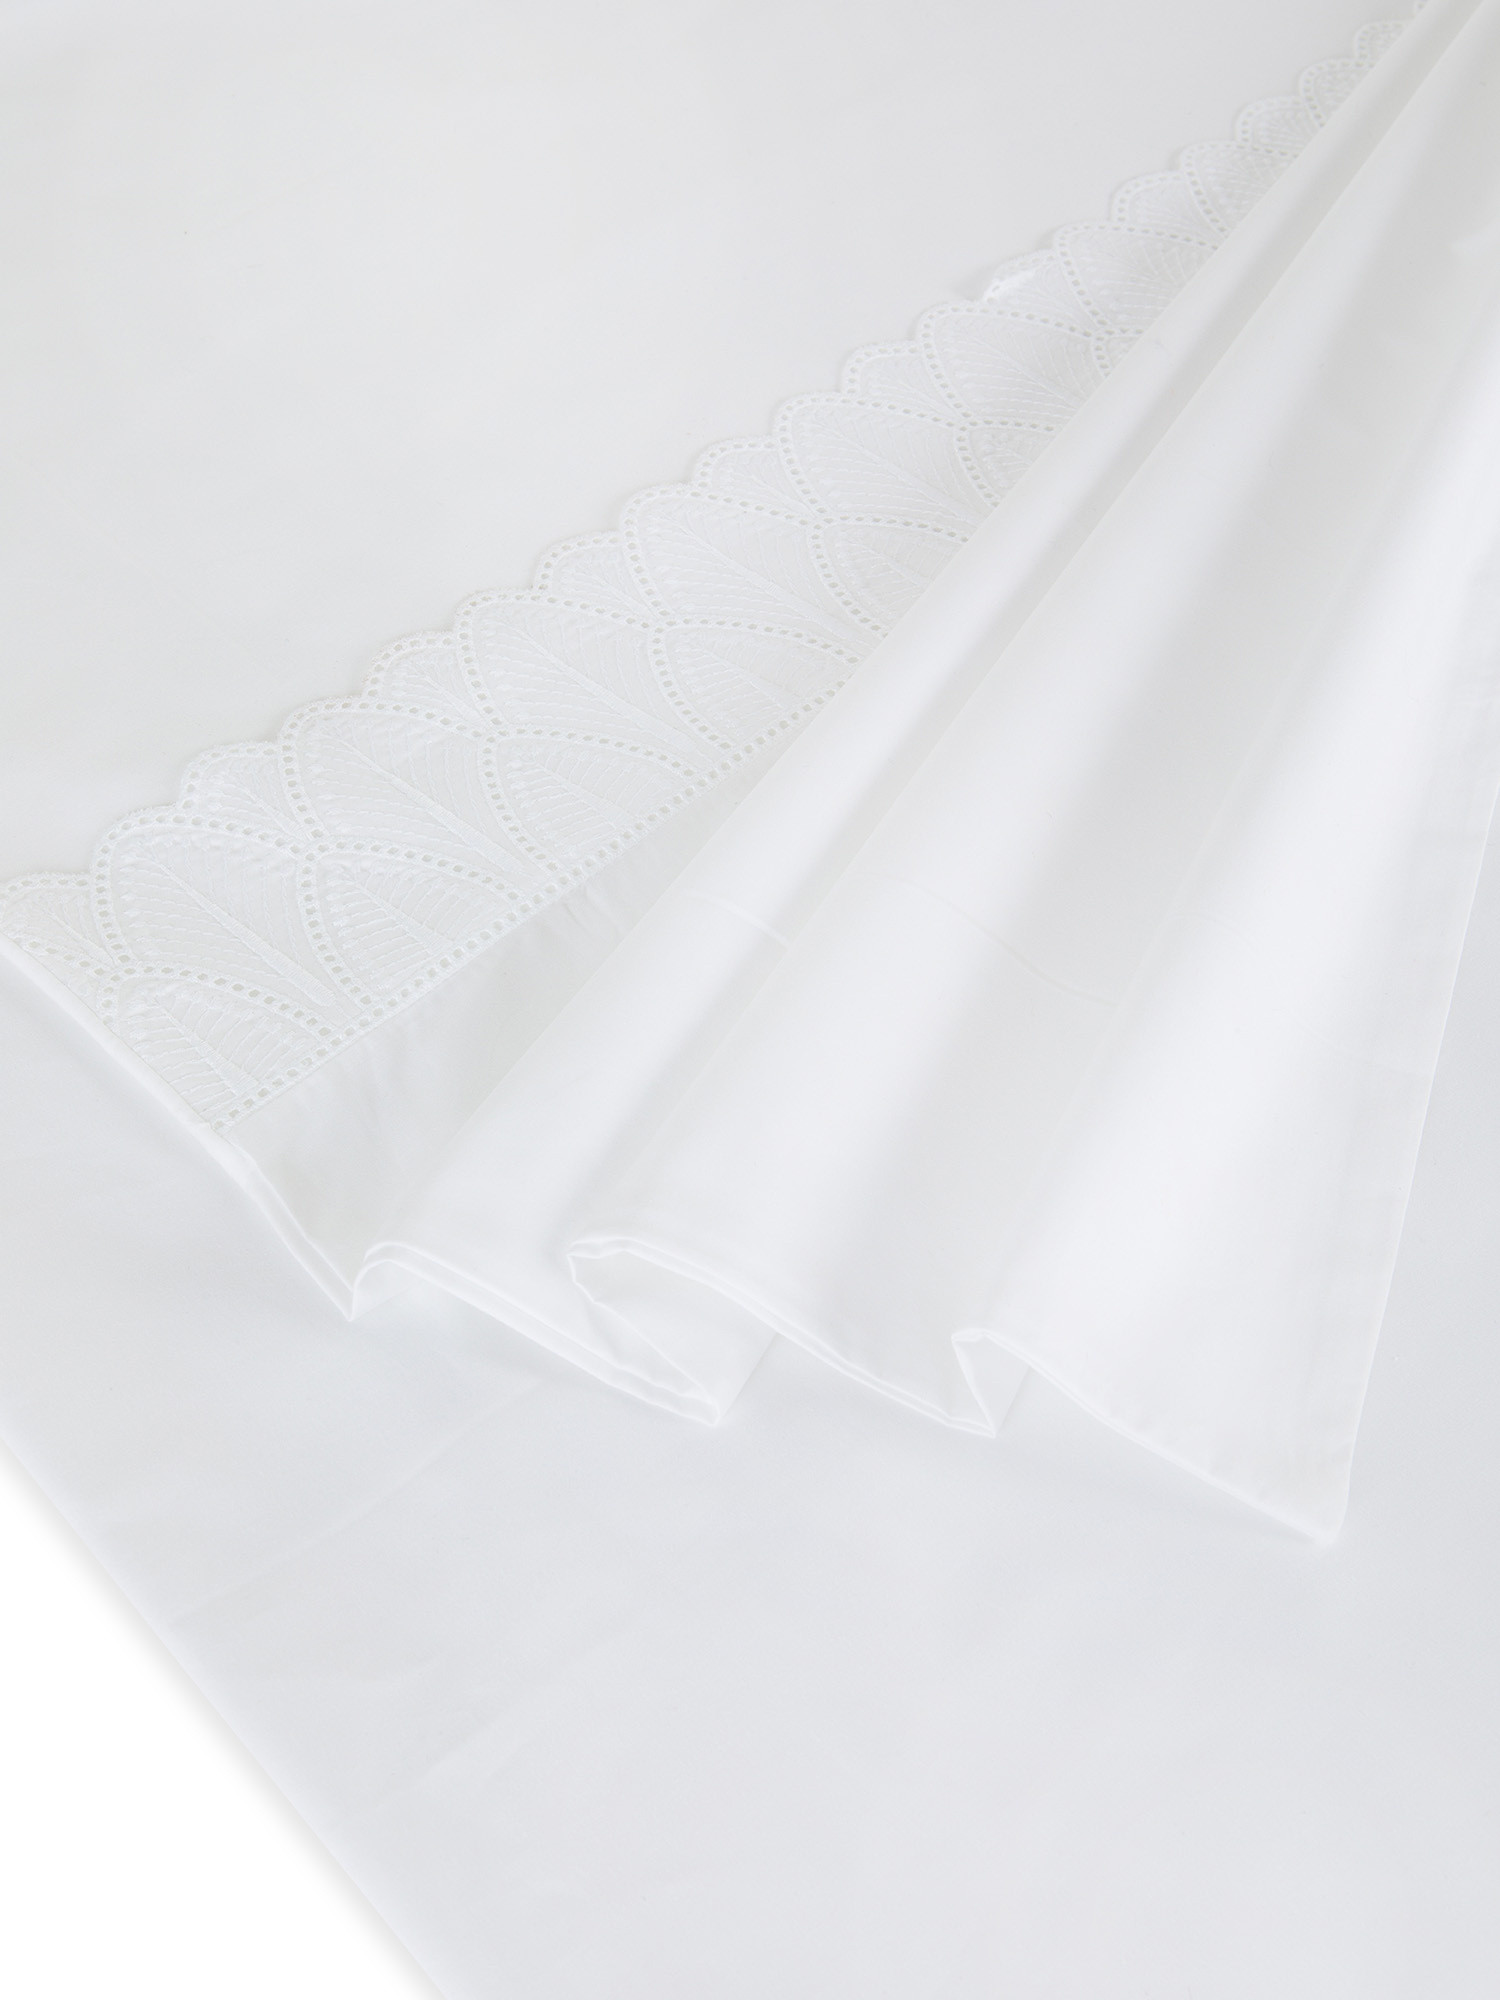 Duvet cover in fine cotton percale Portofino, White, large image number 3